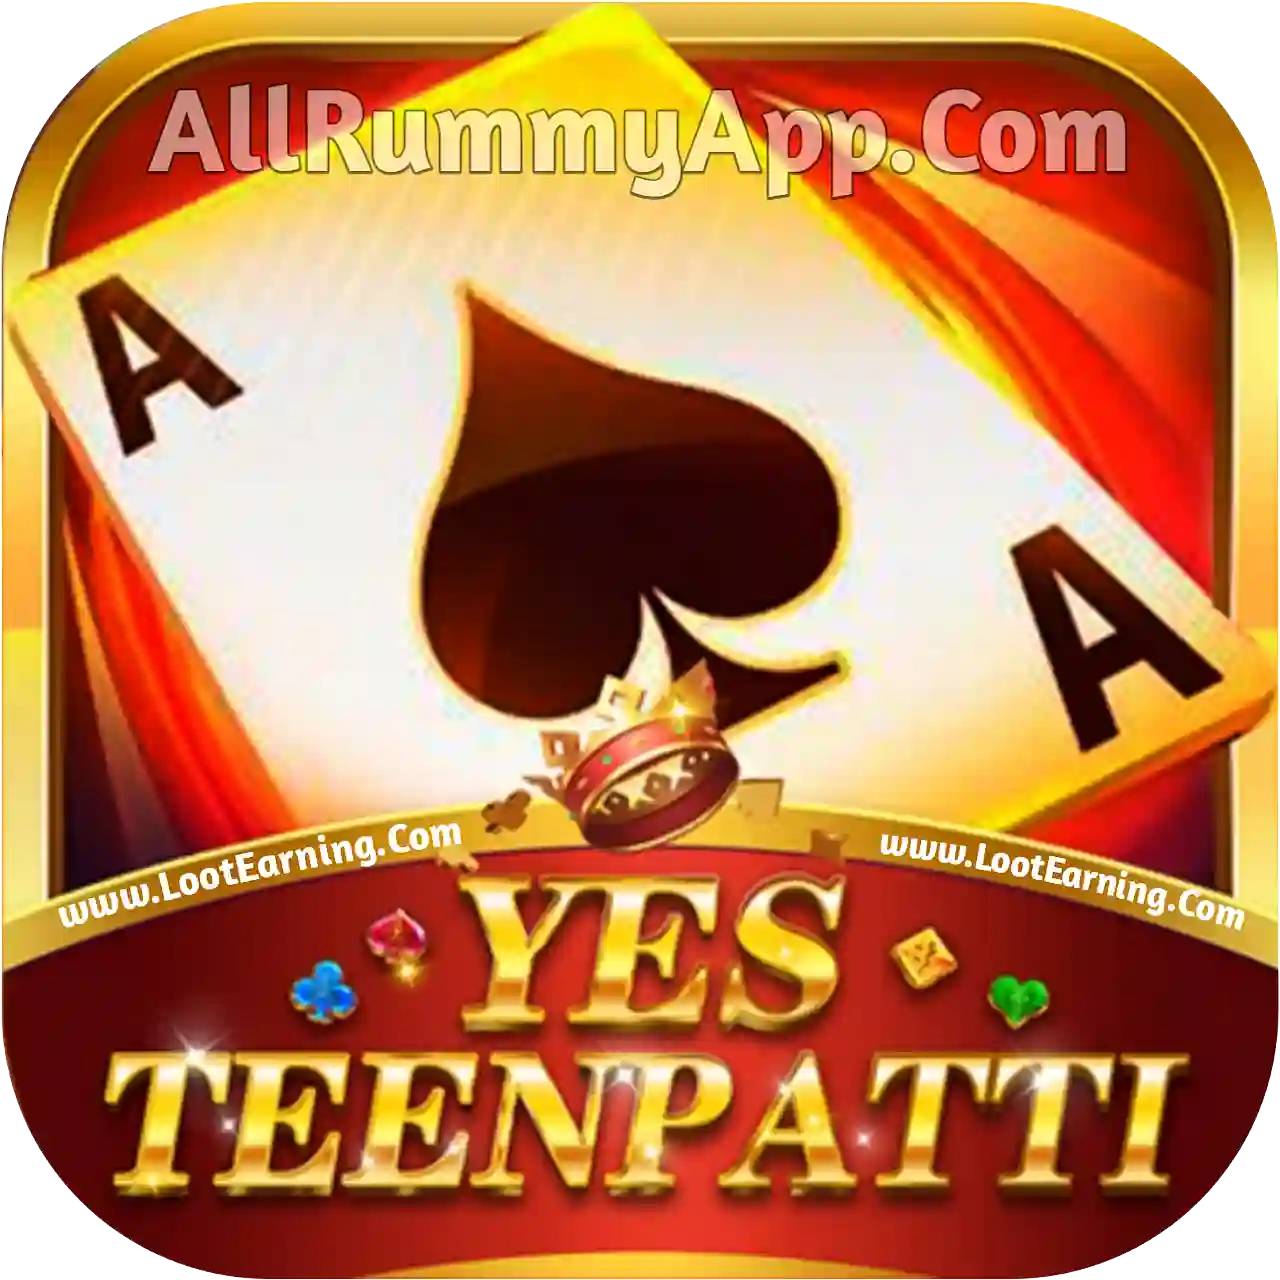 Teen Patti Yes - All Rummy App List 41 Bonus